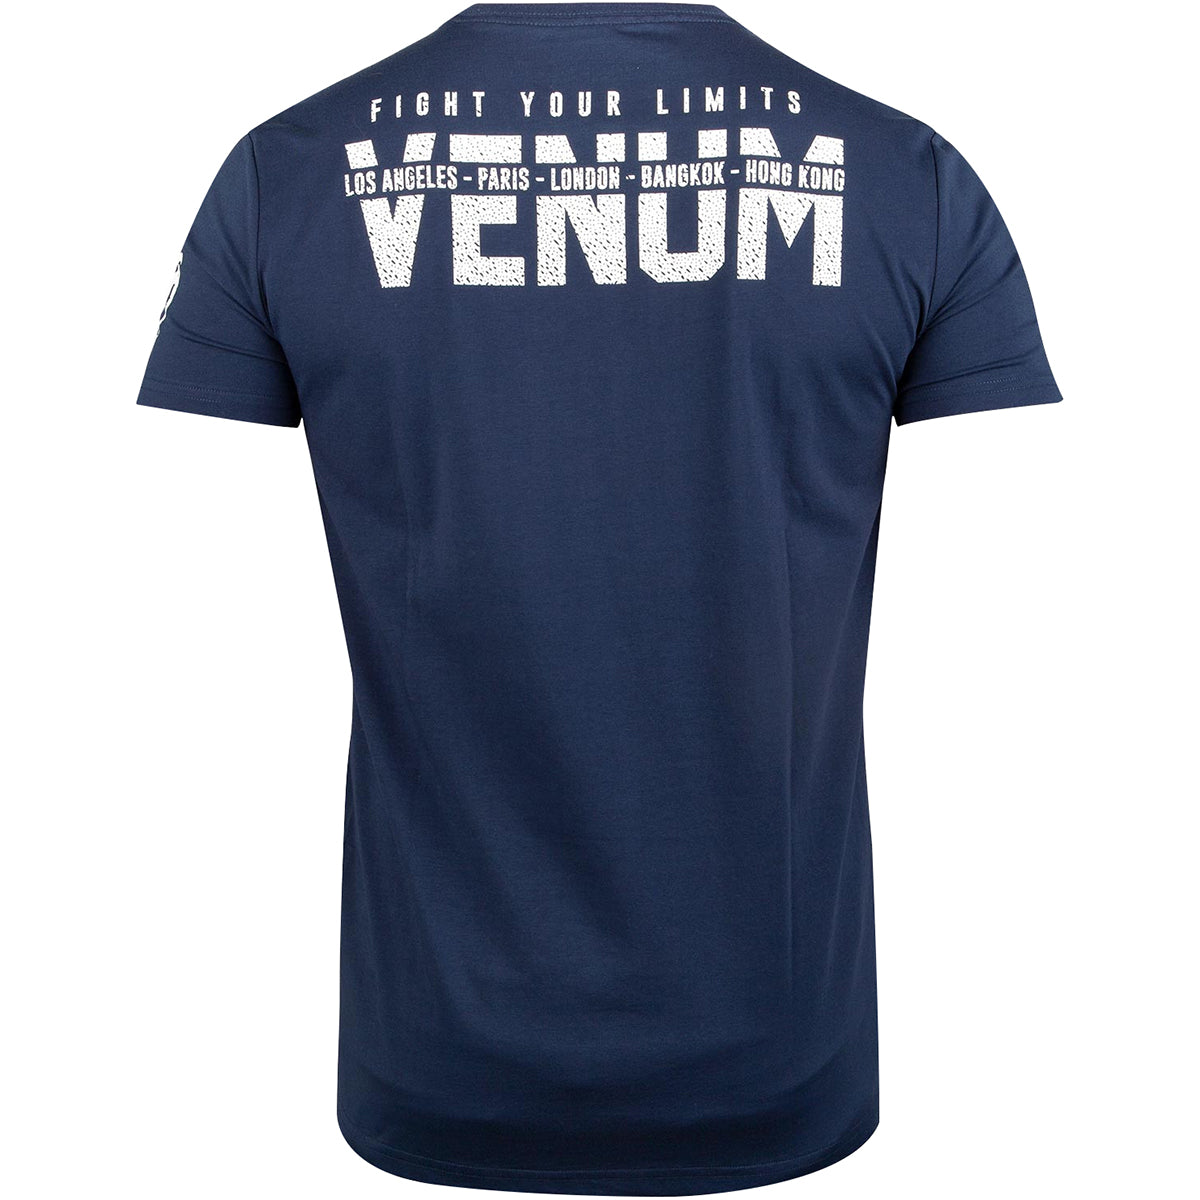 Venum Signature Short Sleeve T-Shirt - Navy Blue/White Venum